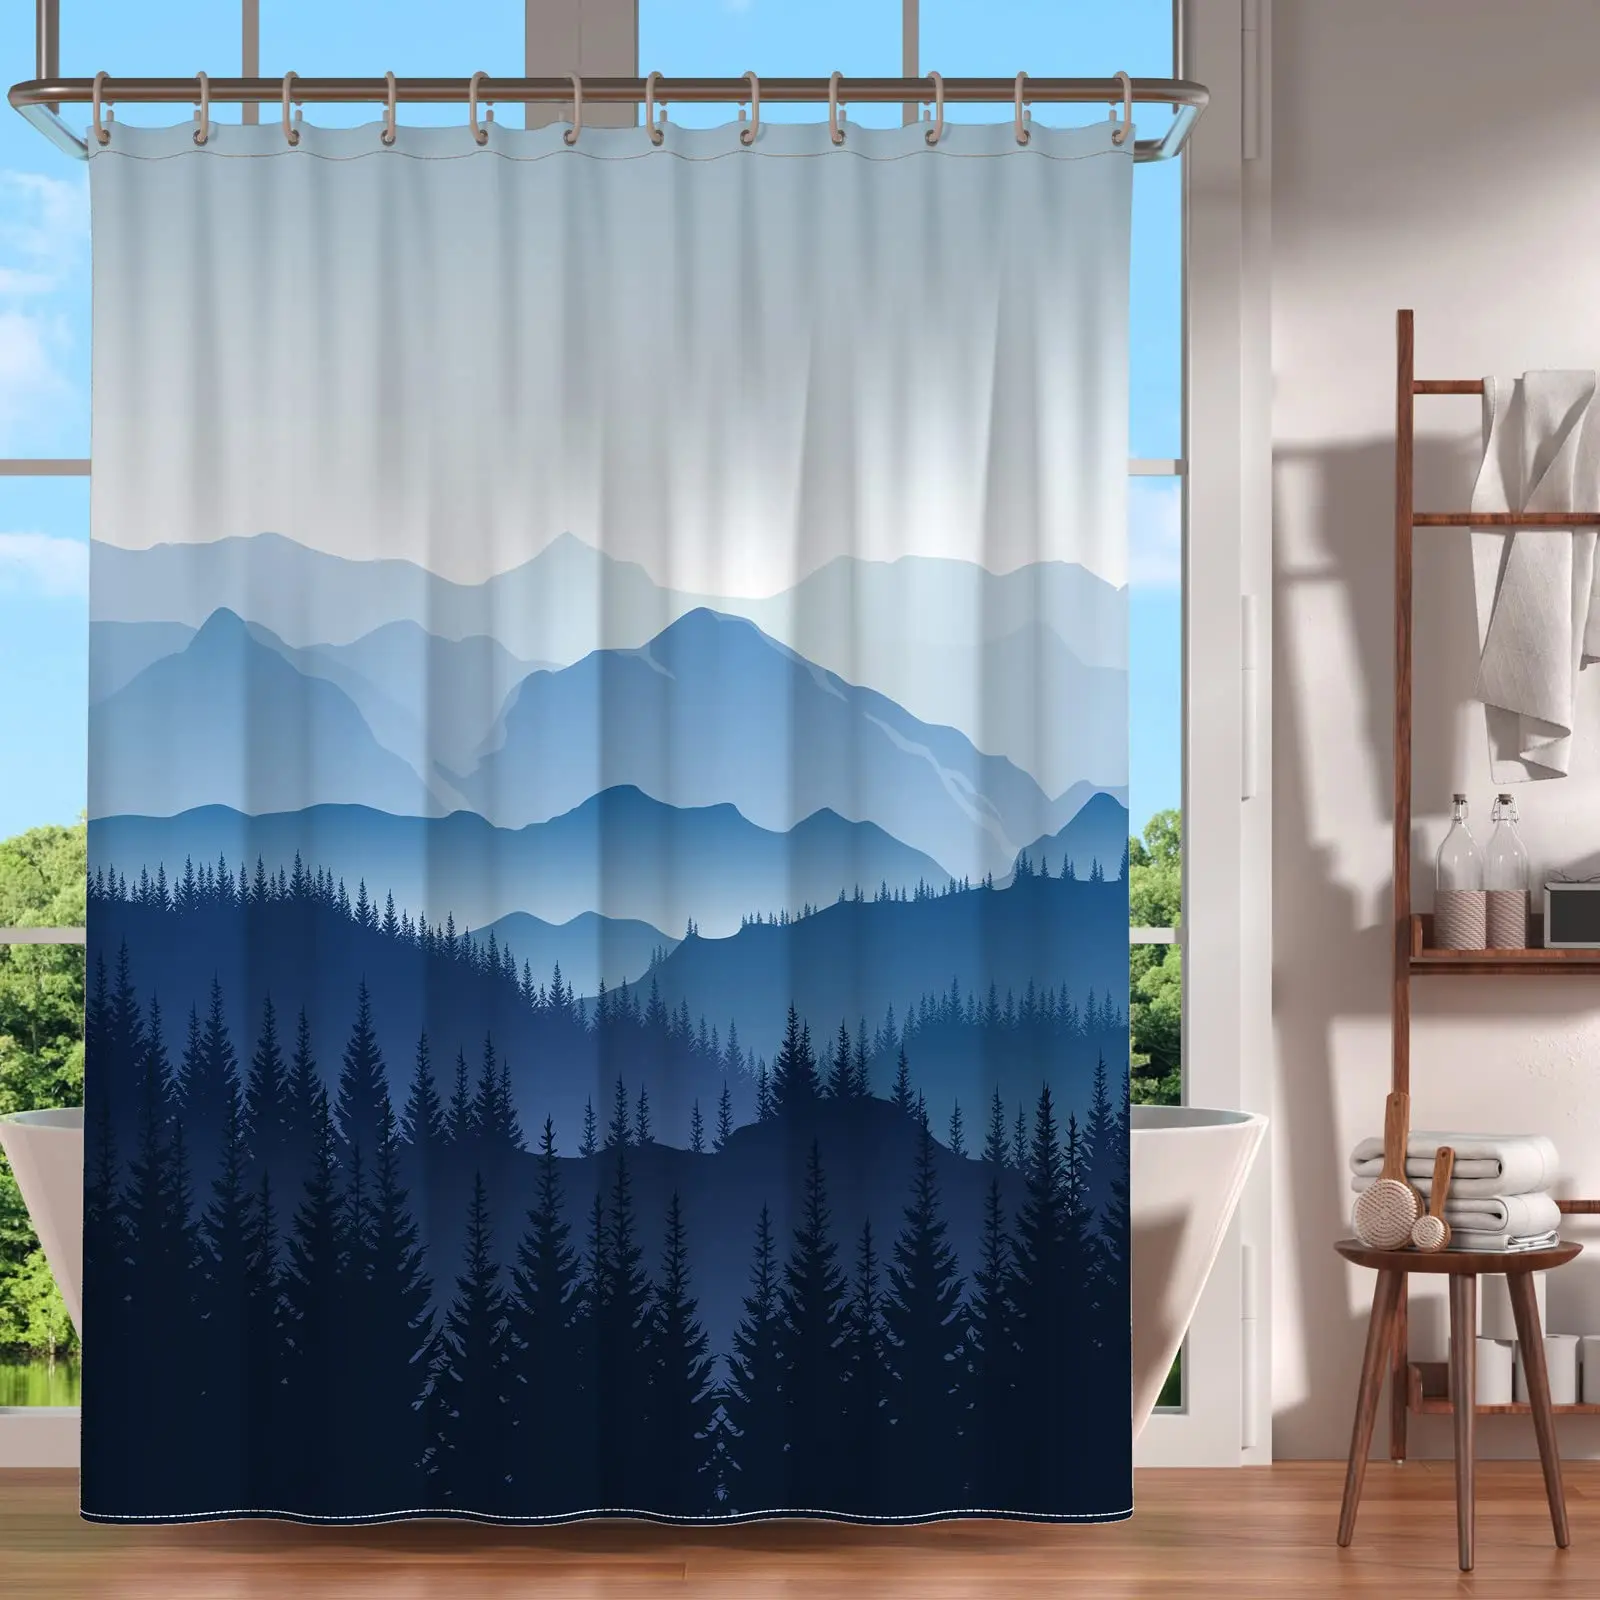 

Curtain Shower Curtain Misty Mountain Forest Bird Foggy Pine Tree Cloudy Rustic Nature Scenery Landscape Fabric Bath Decor